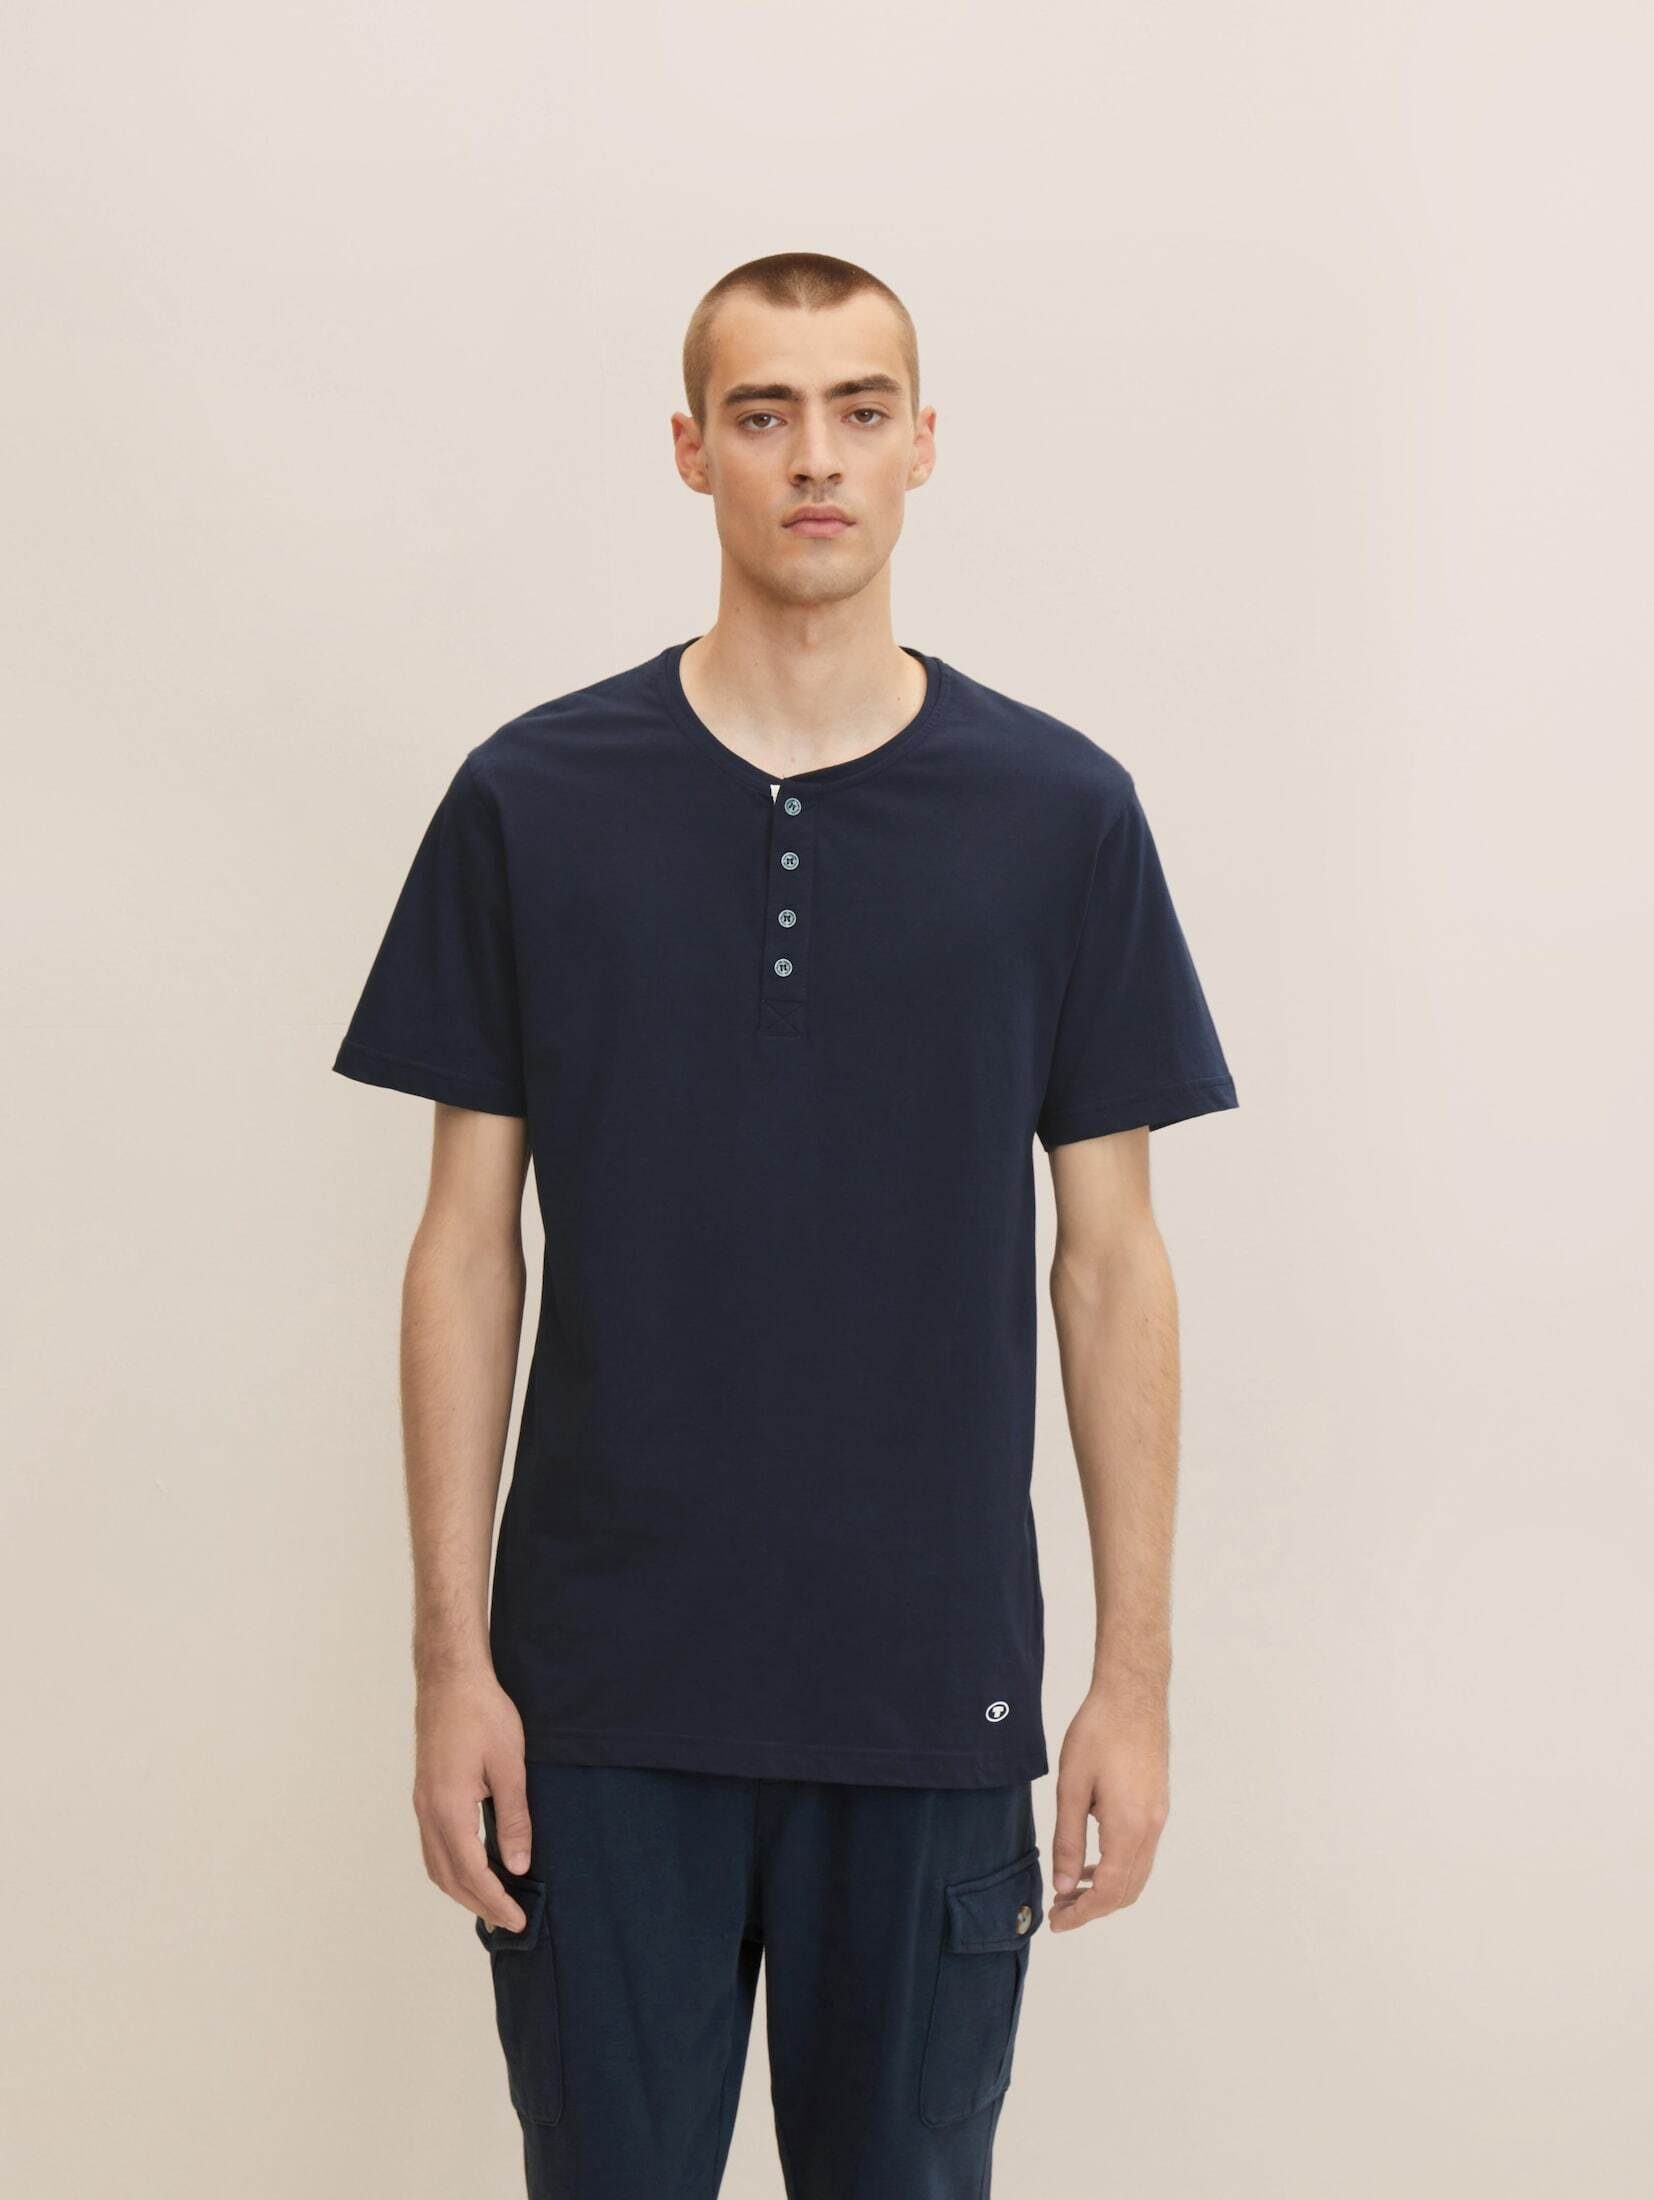 TOM blau-dunkel-uni Pyjama T-Shirt TAILOR Pyjamaoberteil